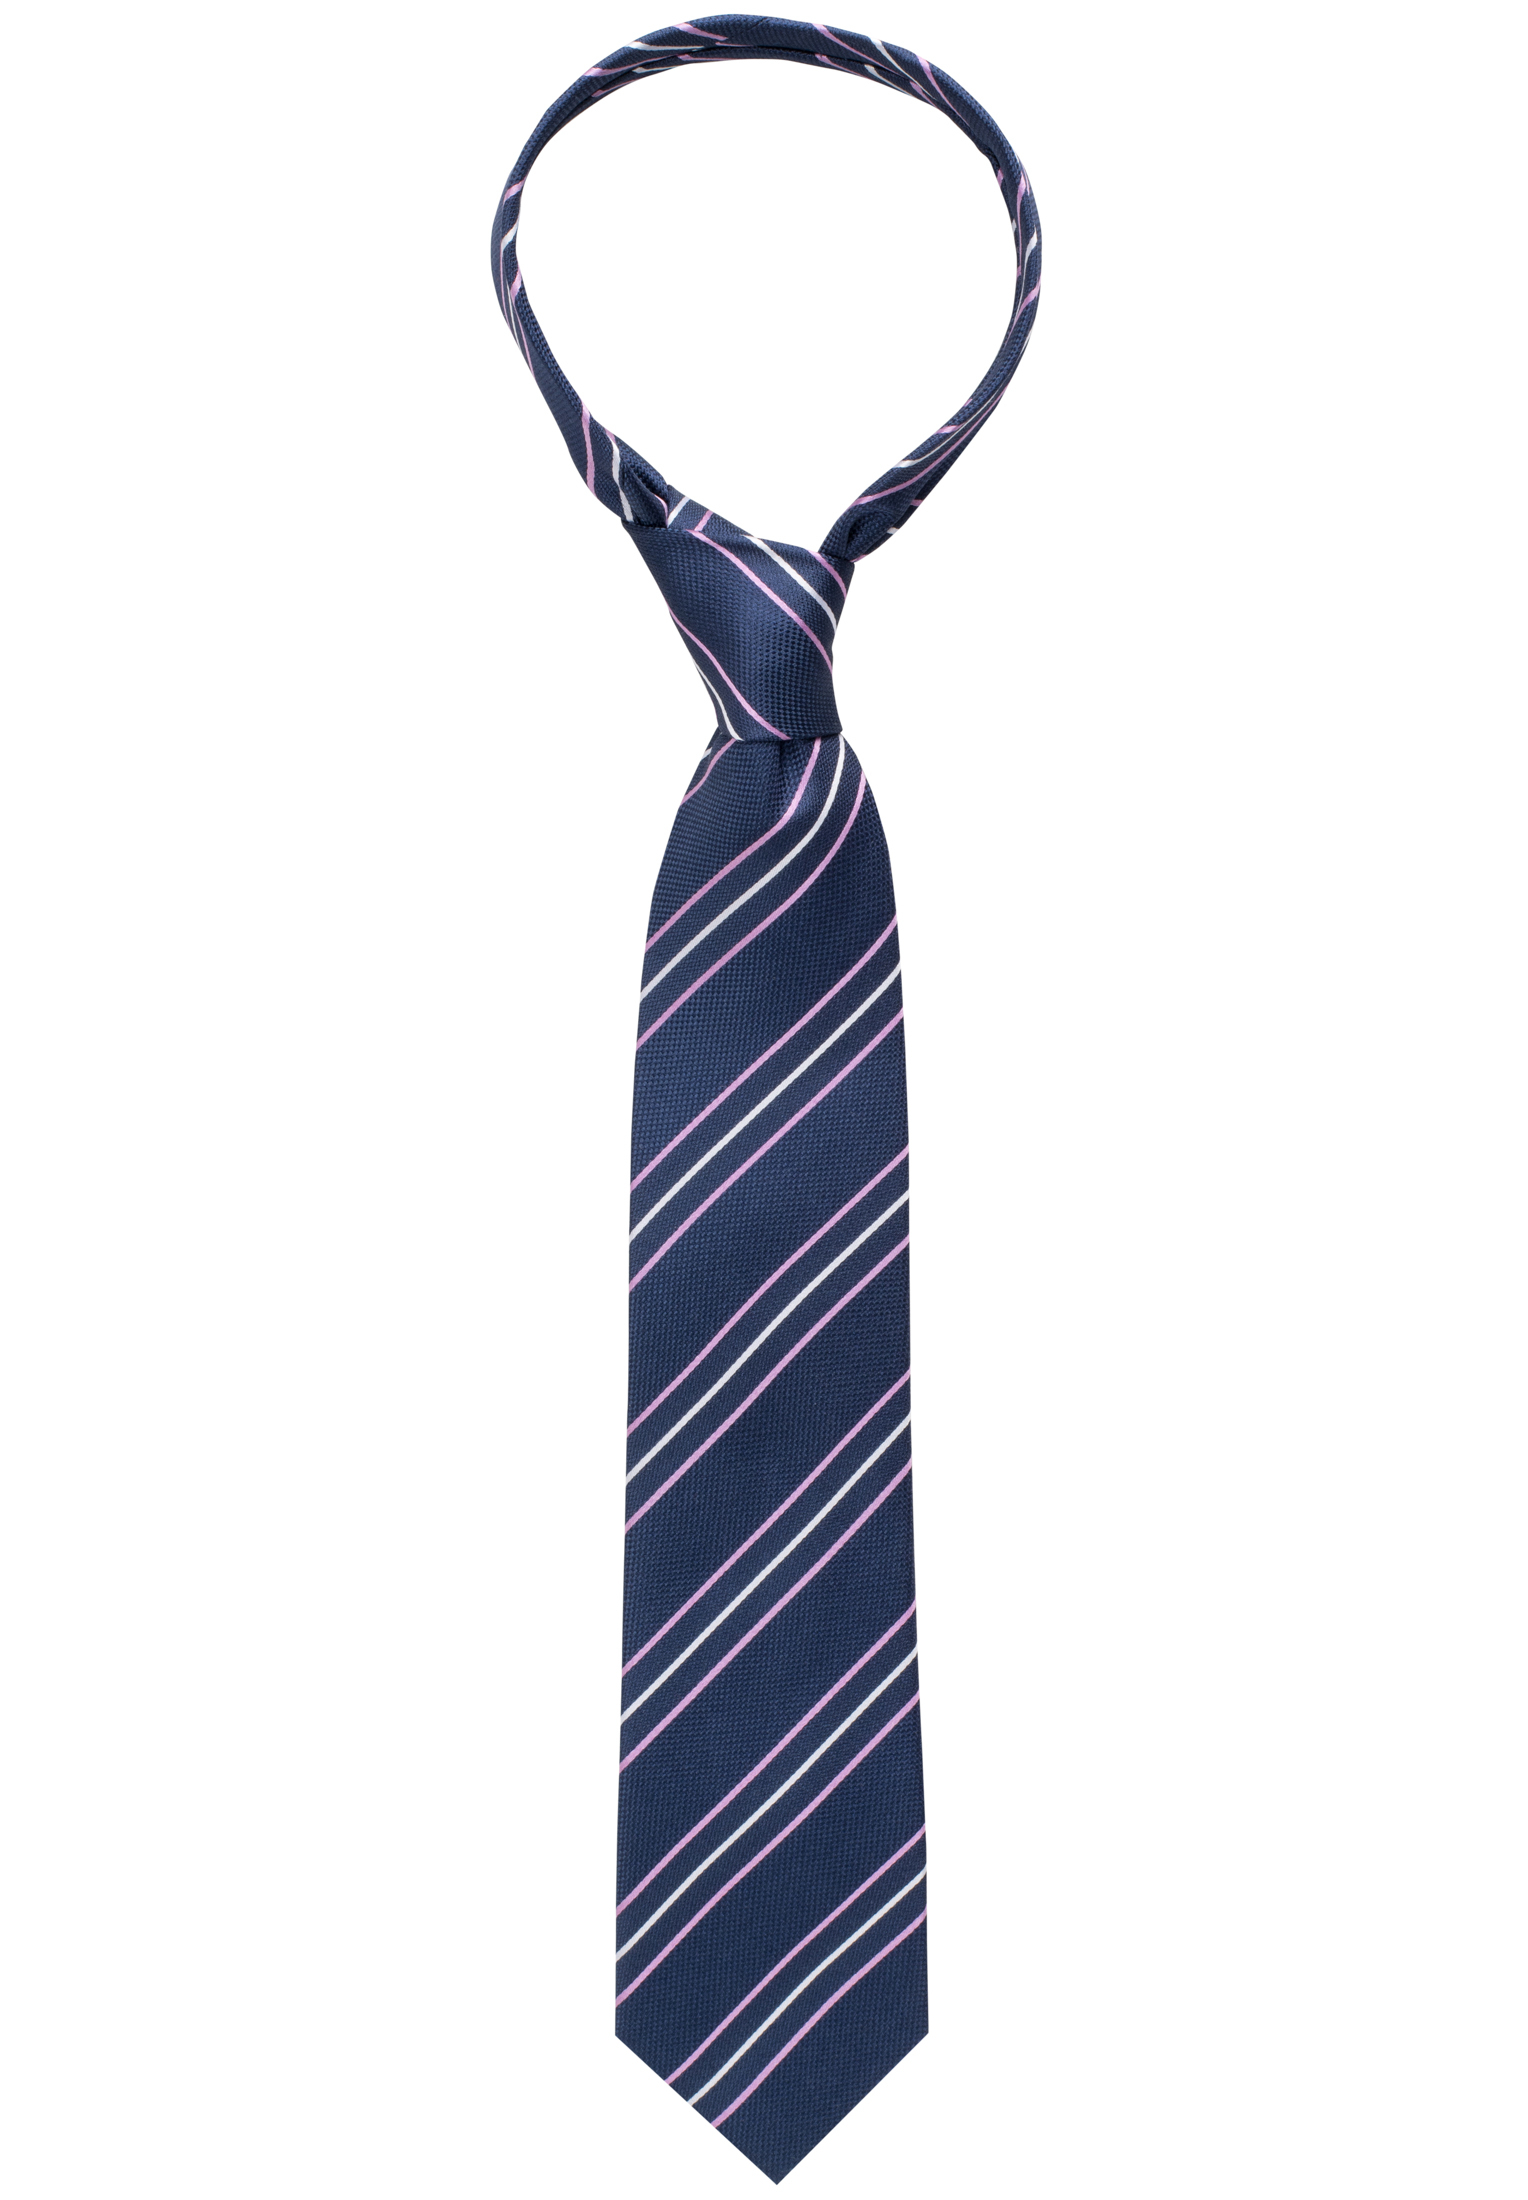 Krawatte navy/rosa | gestreift 1AC00533-81-90-142 navy/rosa in | 142 |